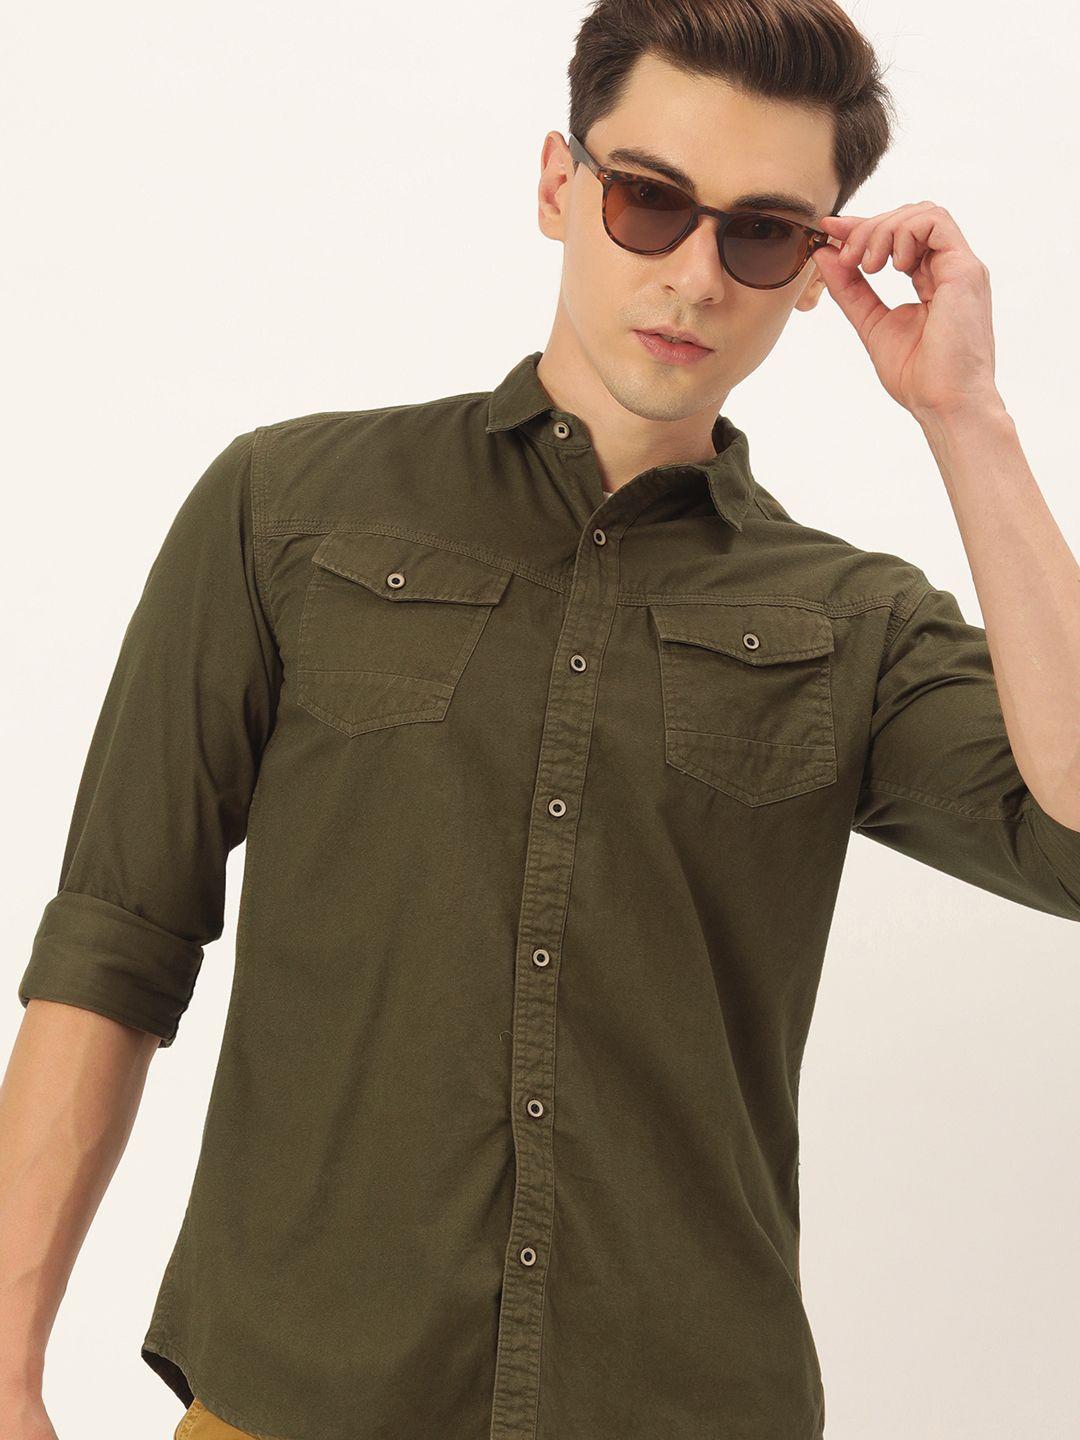 ivoc-men-olive-green-slim-fit-casual-shirt